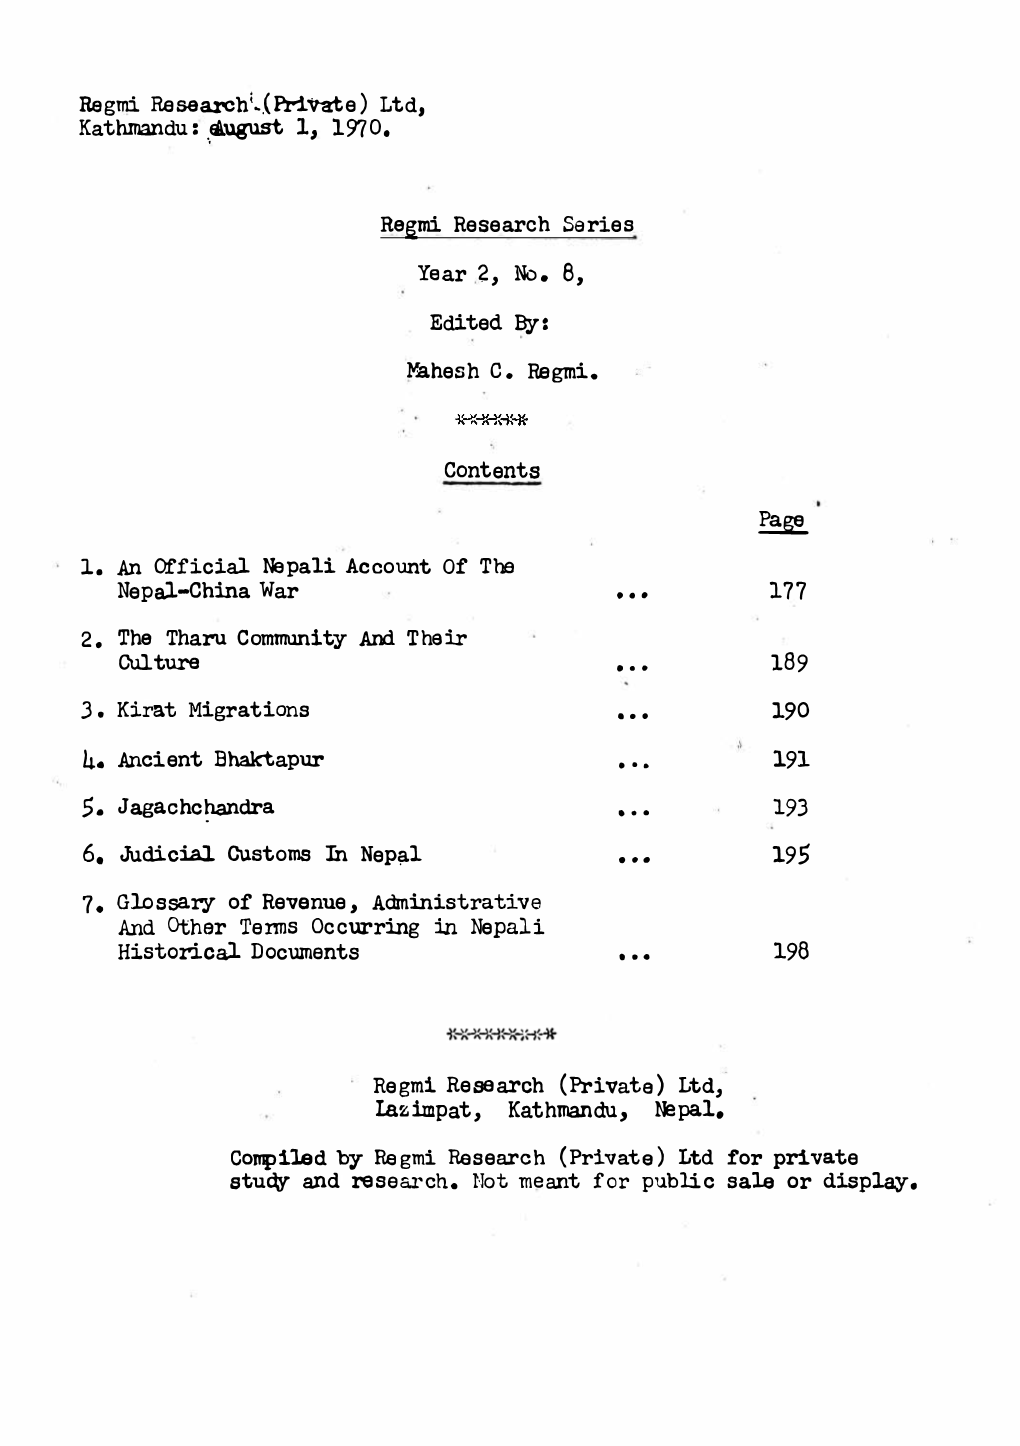 Regmi Research Series, Year 2, No. 8, Aug. 1, 1970